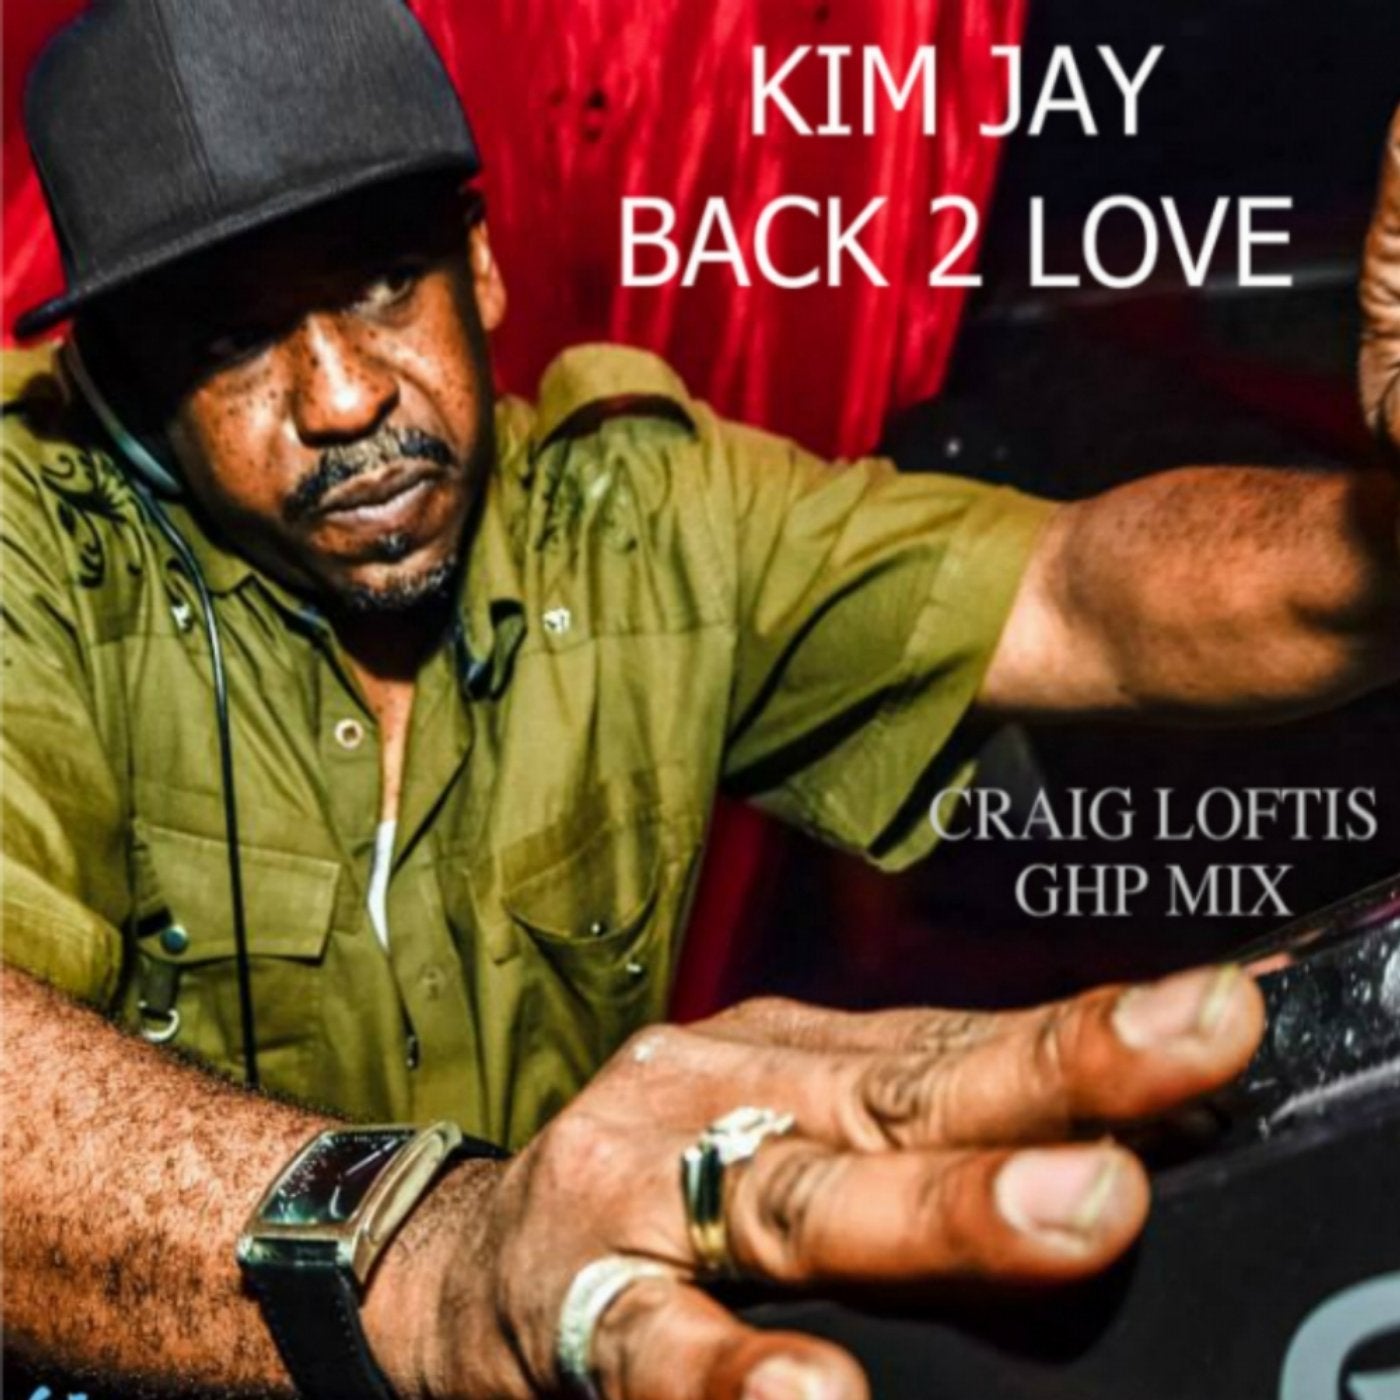 Back 2 Love (Craig Loftis GHP Mix)